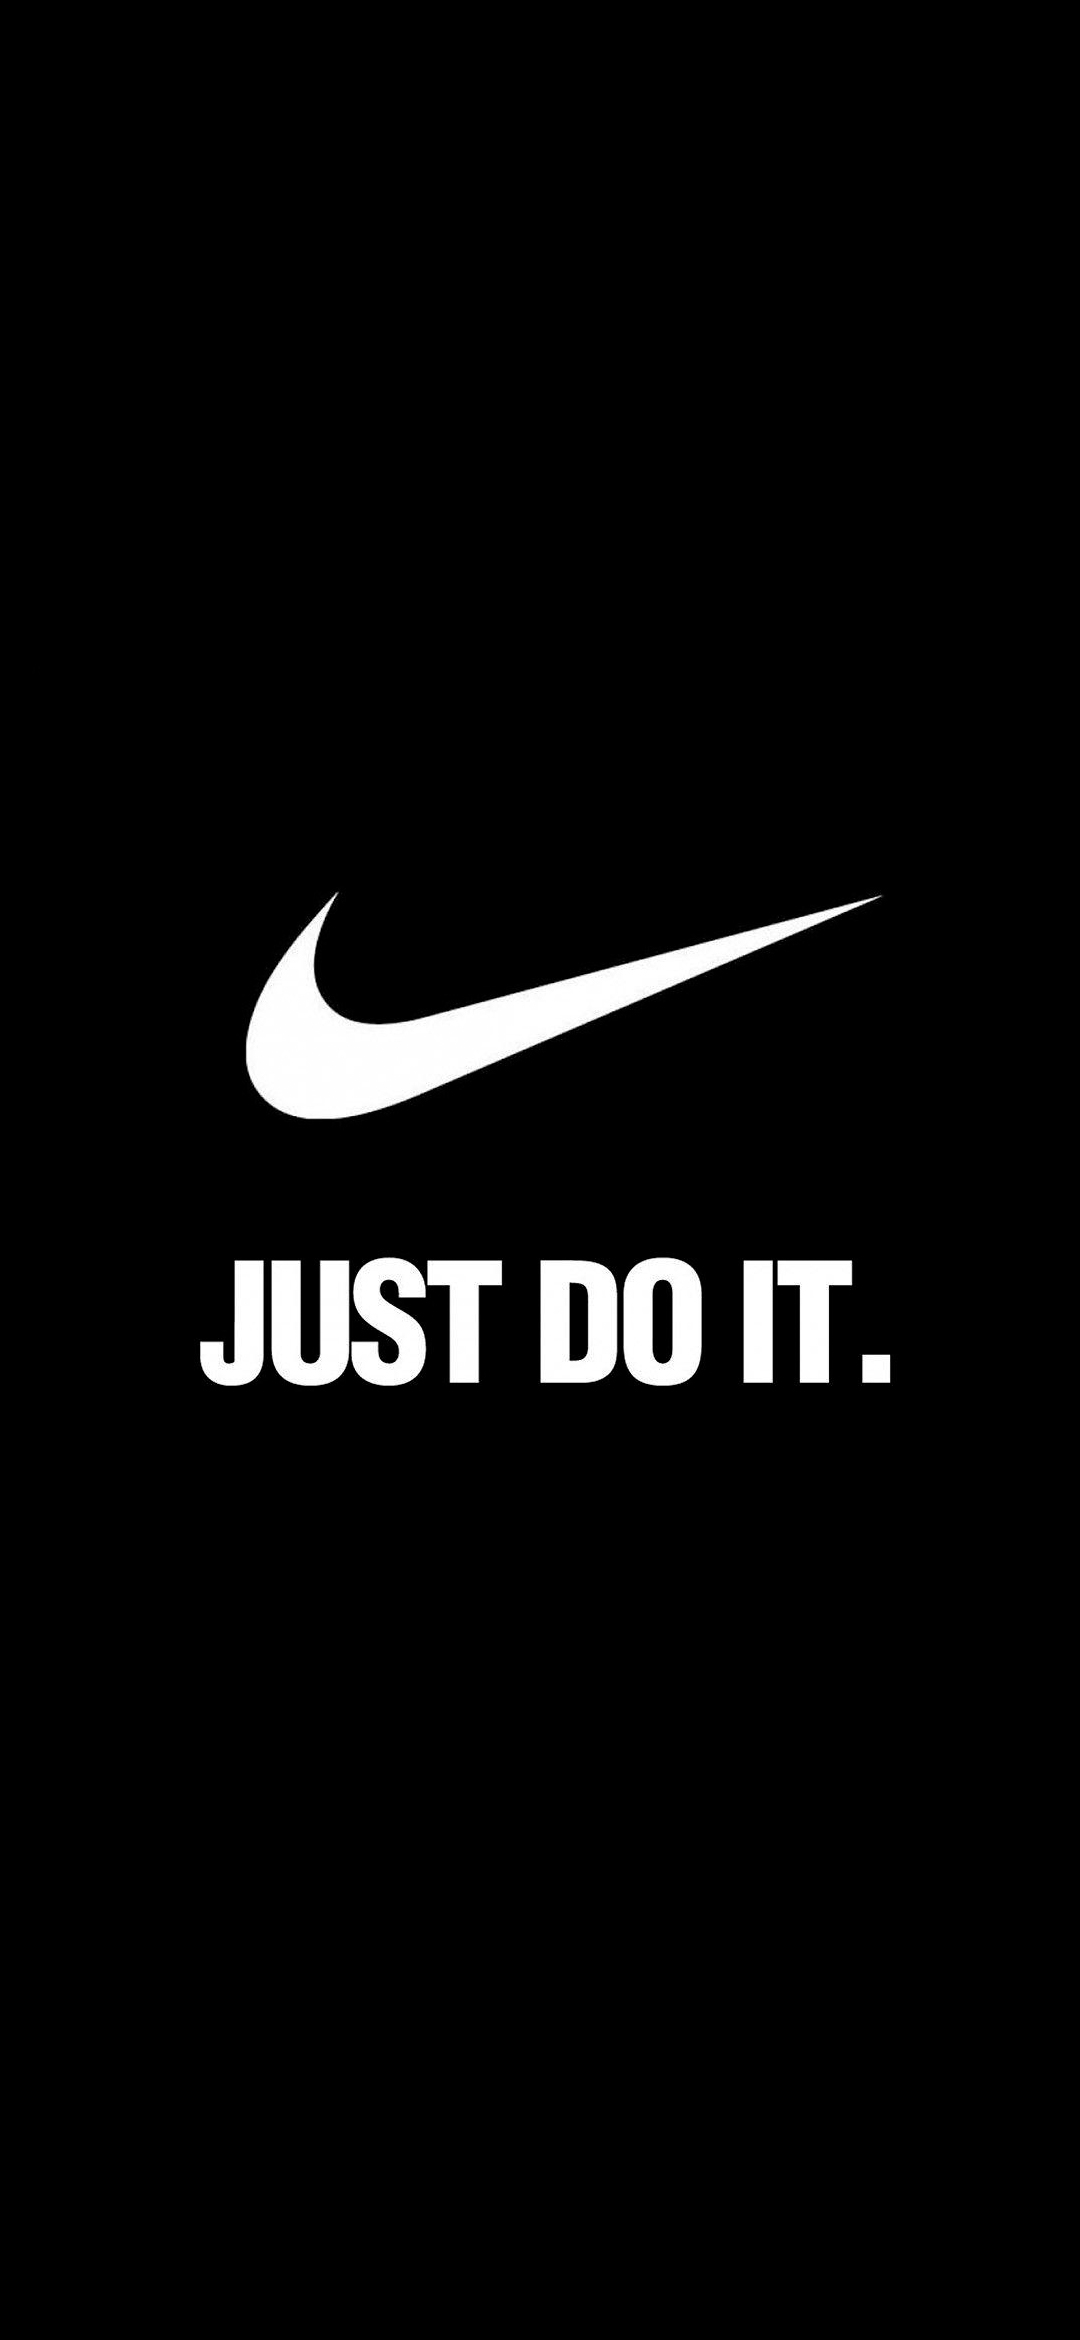 Nike Just Do It Black Shark2 Android スマホ壁紙 待ち受け スマラン